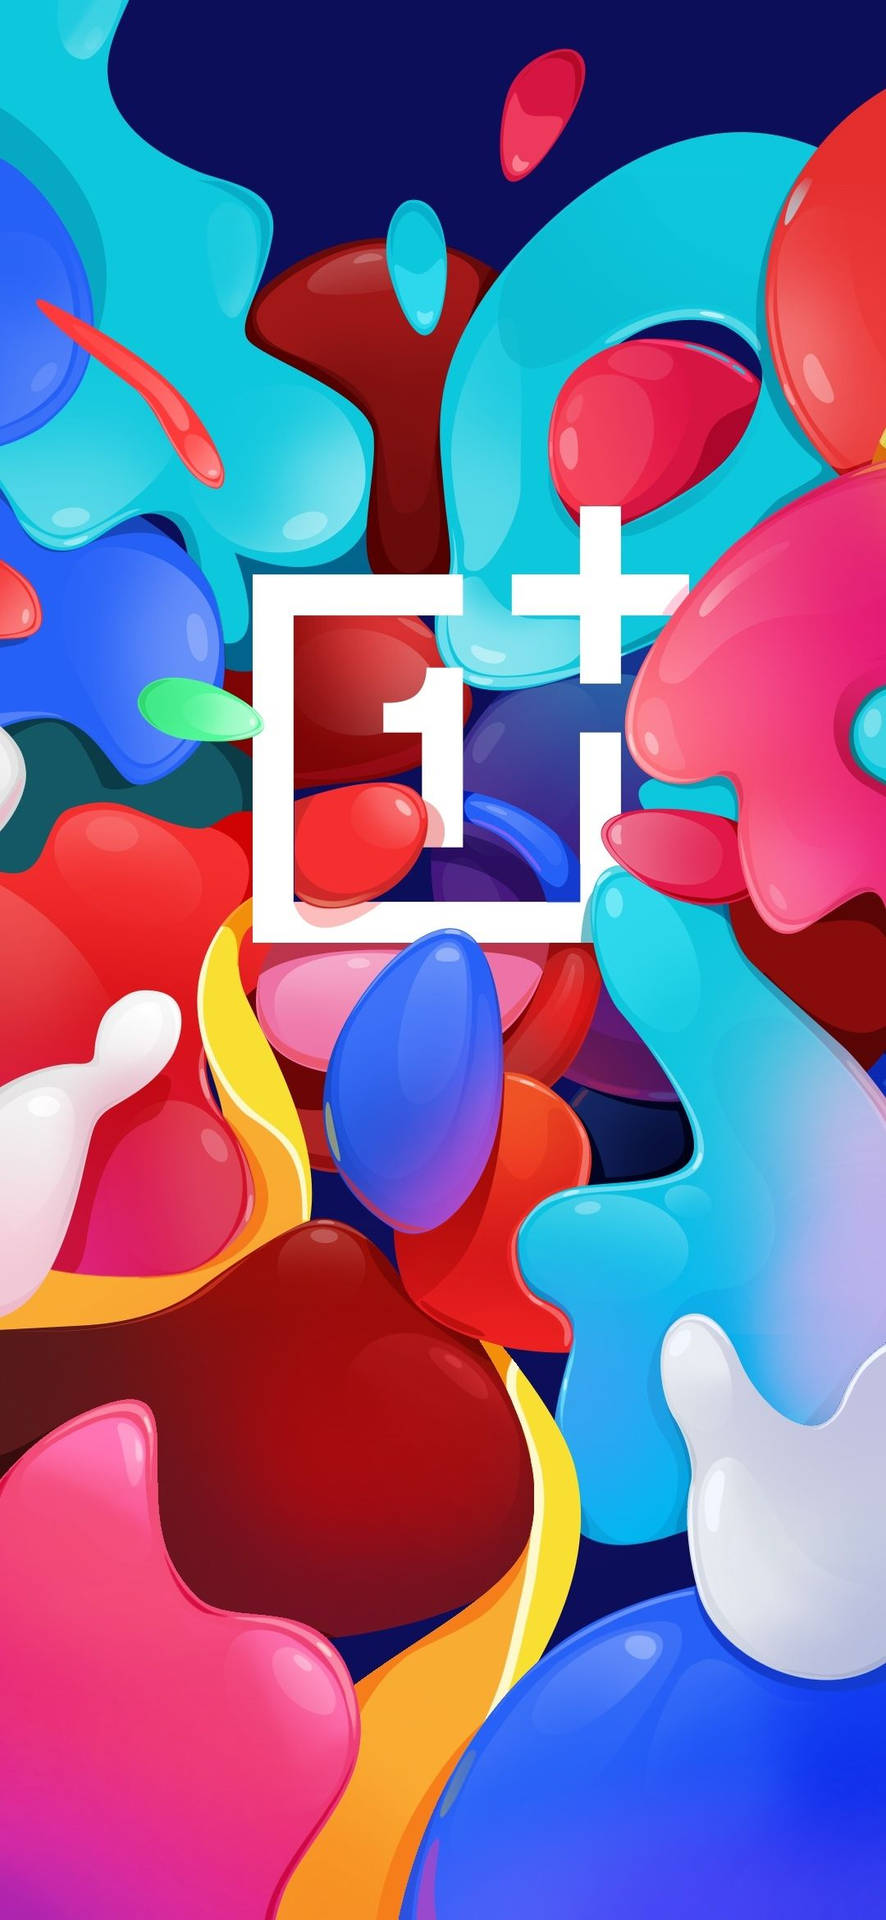 Farverigt abstrakt med OnePlus 9R logo Wallpaper